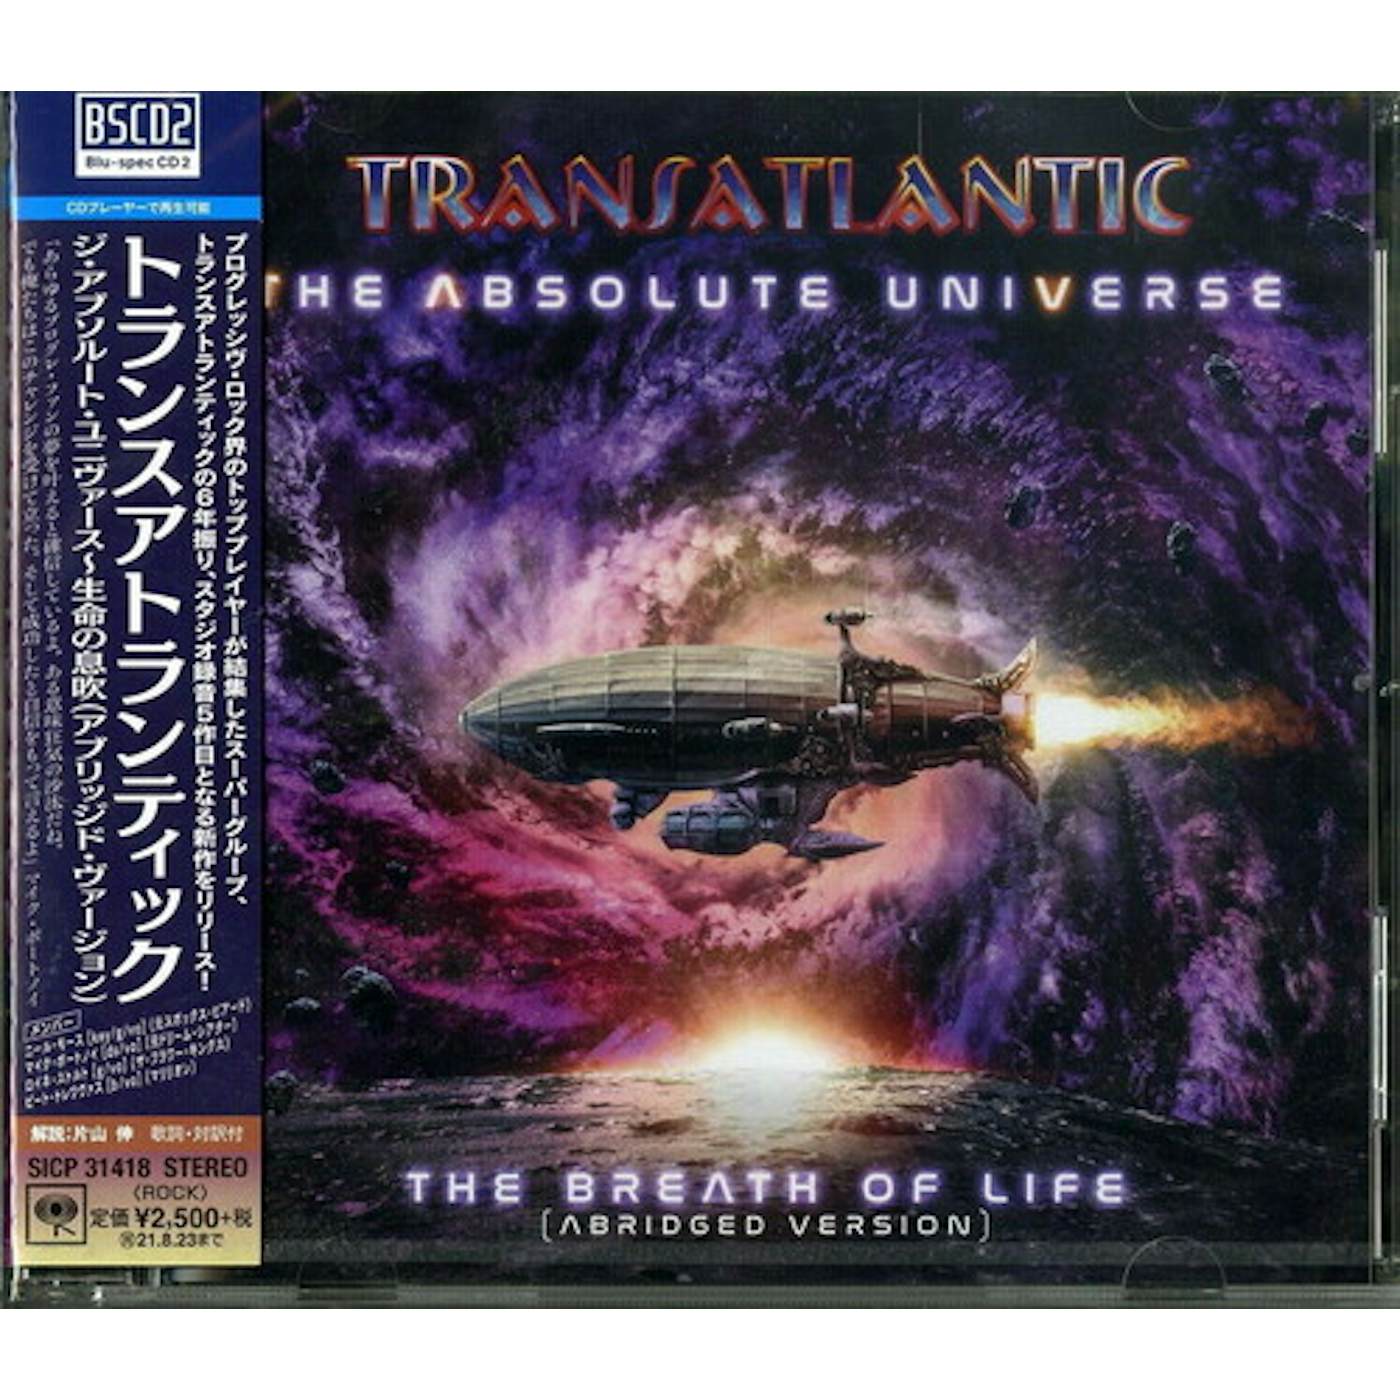 Transatlantic ABSOLUTE UNIVERSE: THE BREATH OF LIFE (ABRIDGED) CD